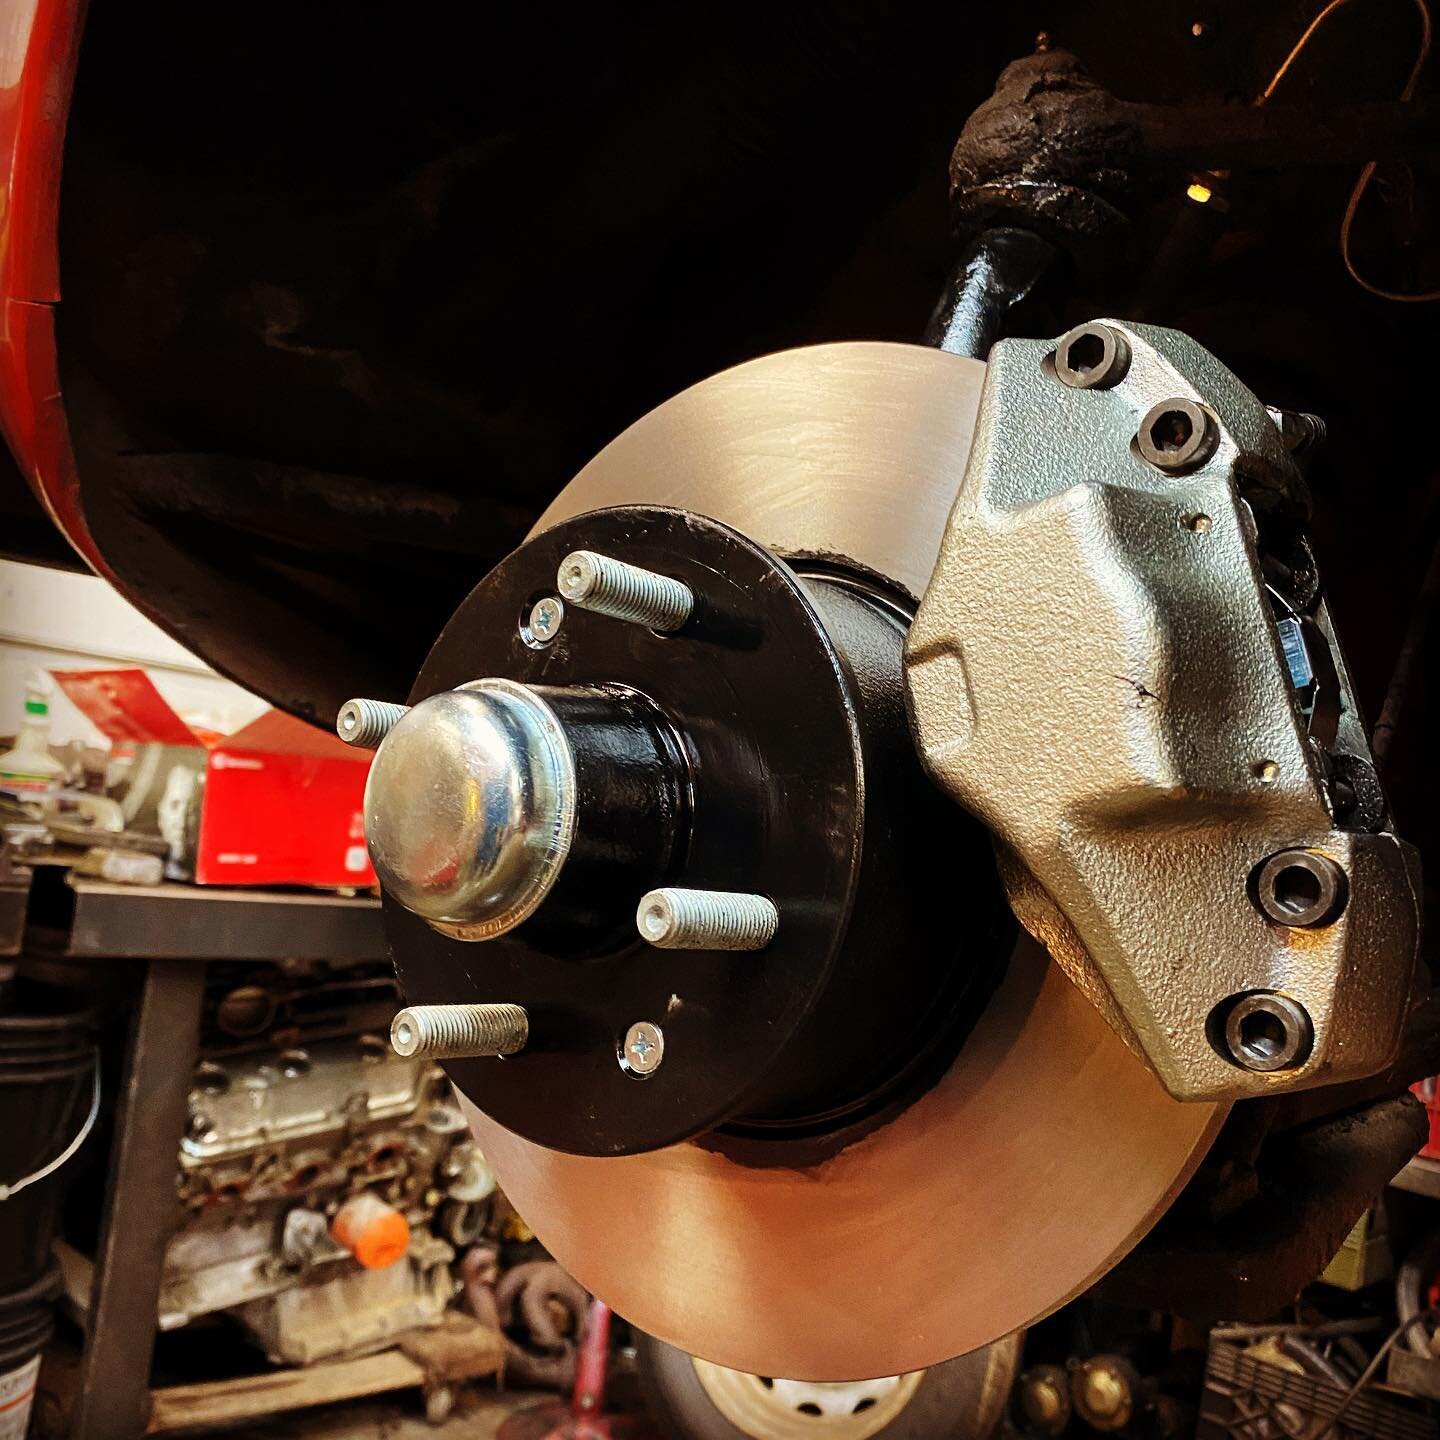 Full brake overhaul on this Giulia. Disc upgrade kit from @myalfagroup , master cylinder rebuild, and new brake lines. Stopping powaaaa!
#aflaromeo 
#italiancar 
#alfalovers 
#aflfagta 
#alfaromeogtv 
#velocealfa 
#velocesquad 
#alfaracing 
#alfagiul